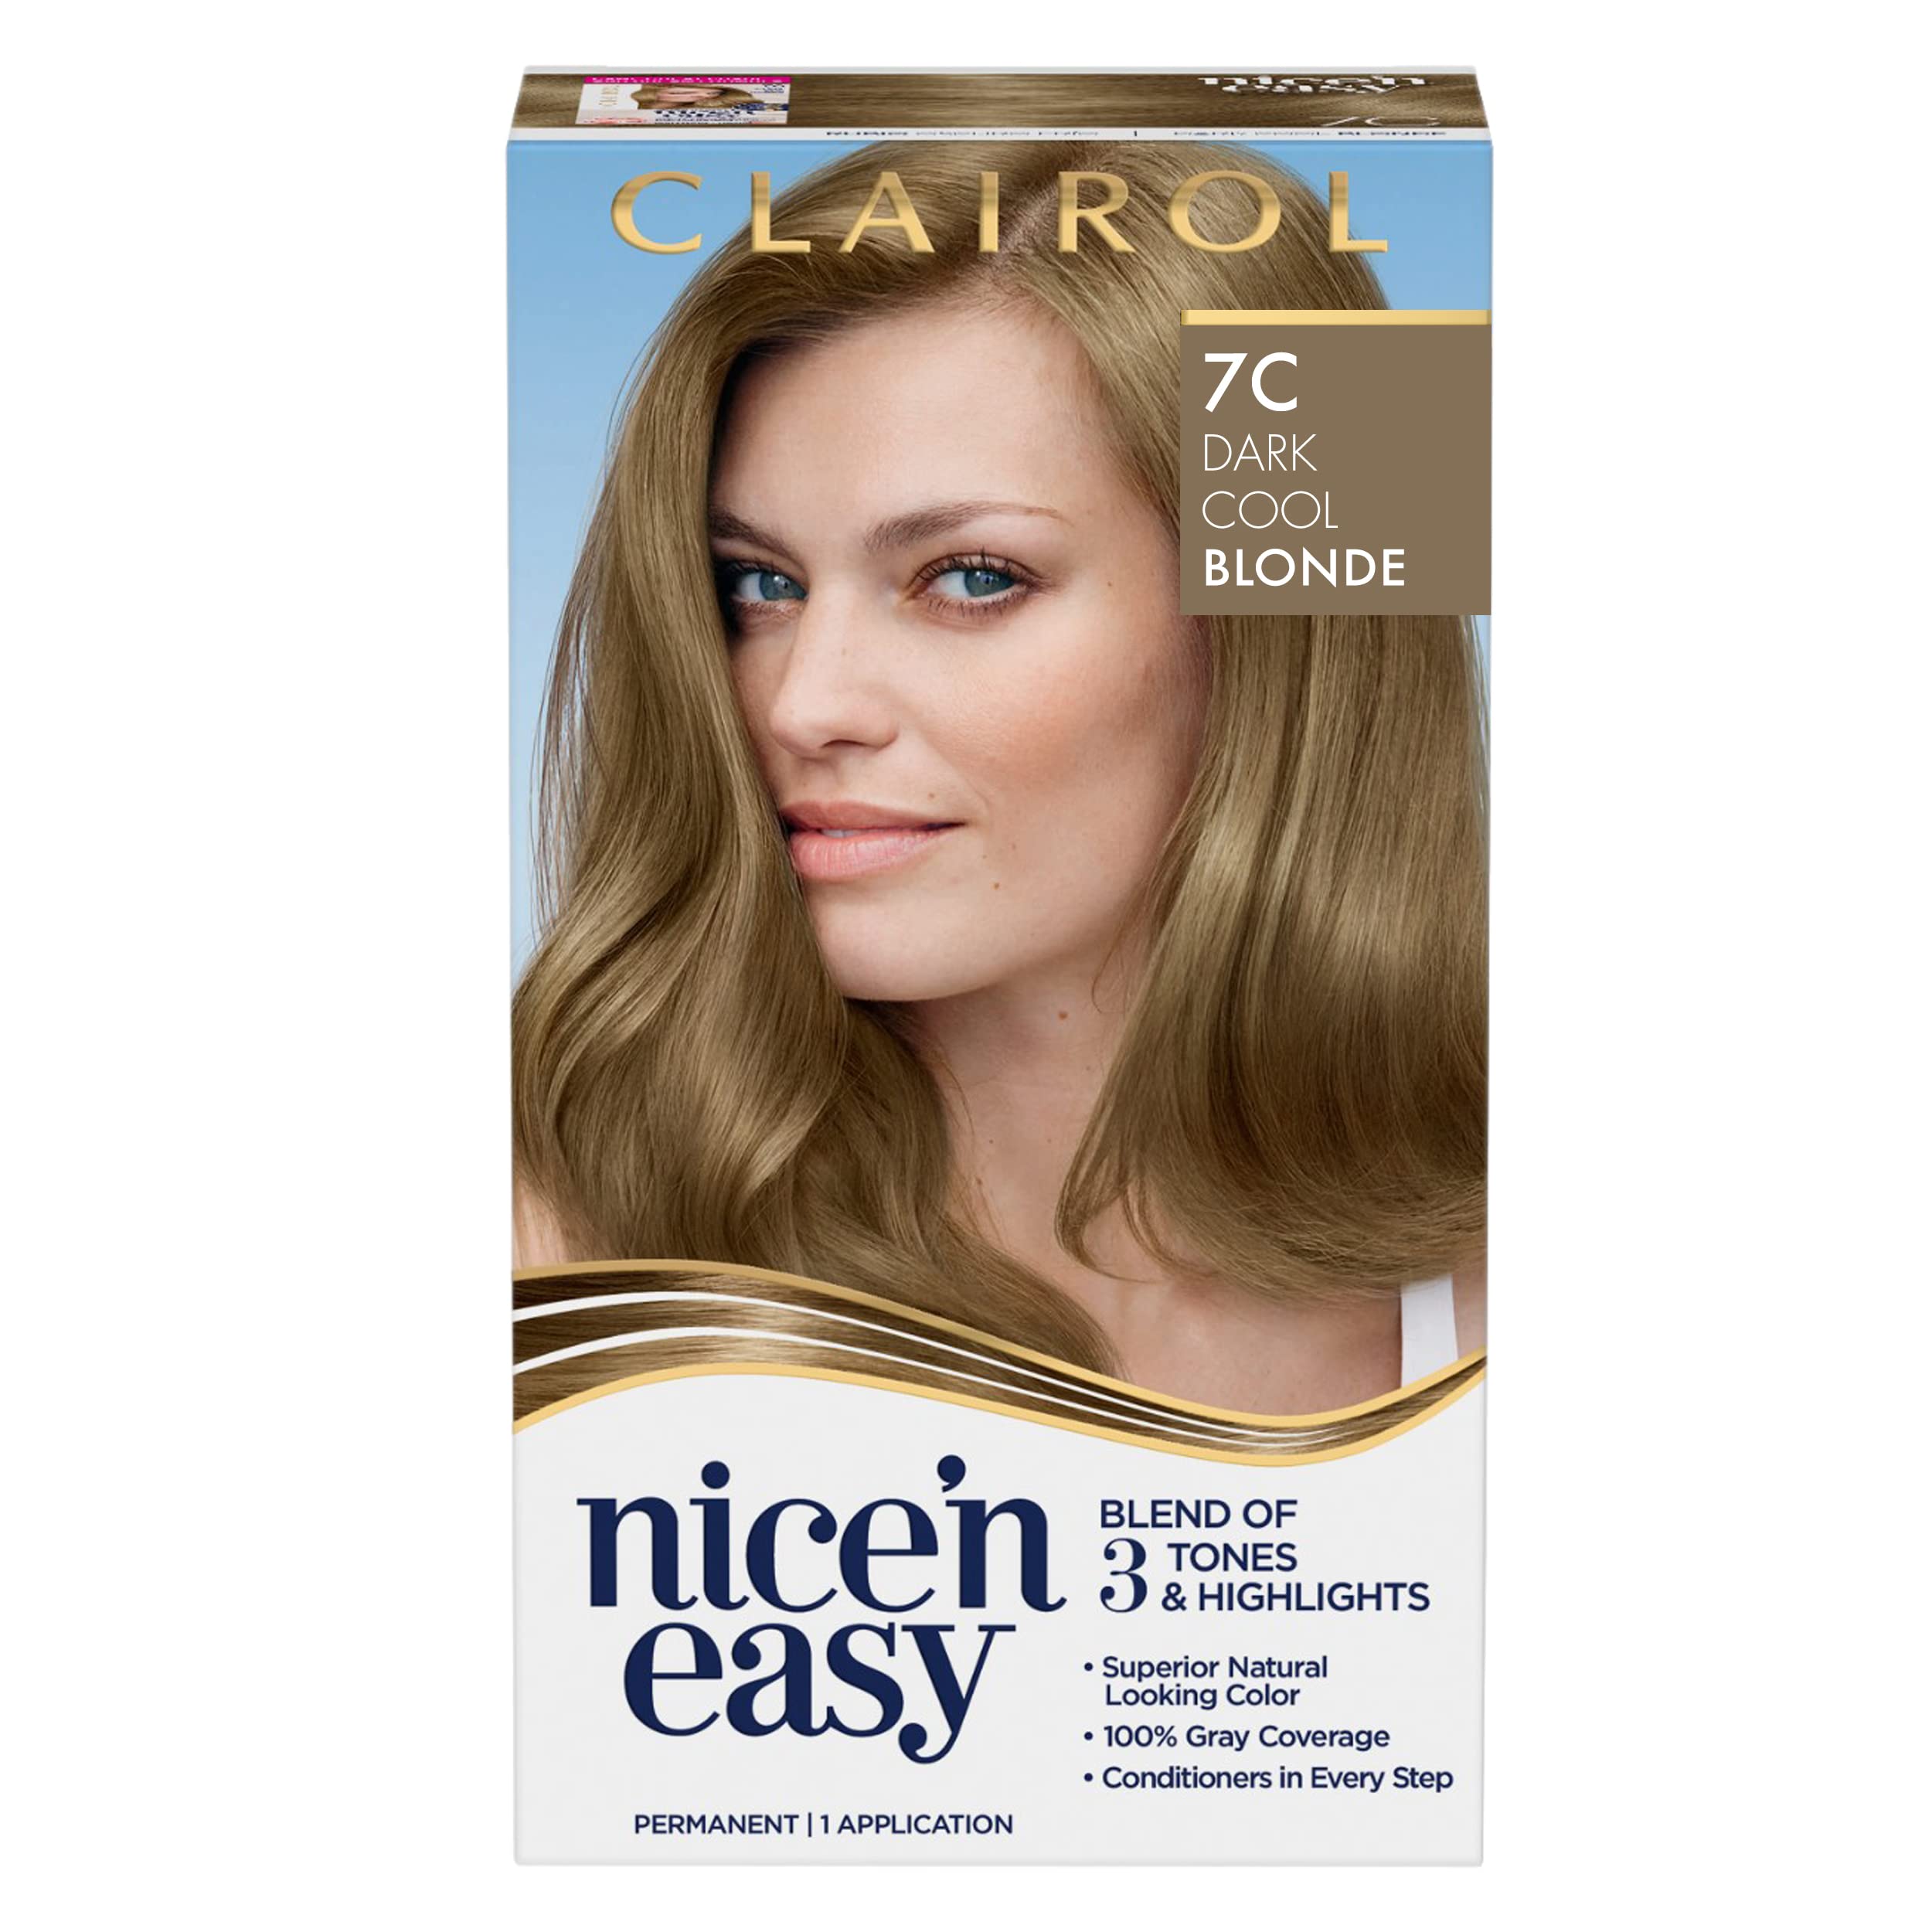 Mua Clairol Nice'n Easy Permanent Hair Dye, 7C Dark Cool Blonde Hair Color,  Pack of 1 trên Amazon Mỹ chính hãng 2023 | Giaonhan247